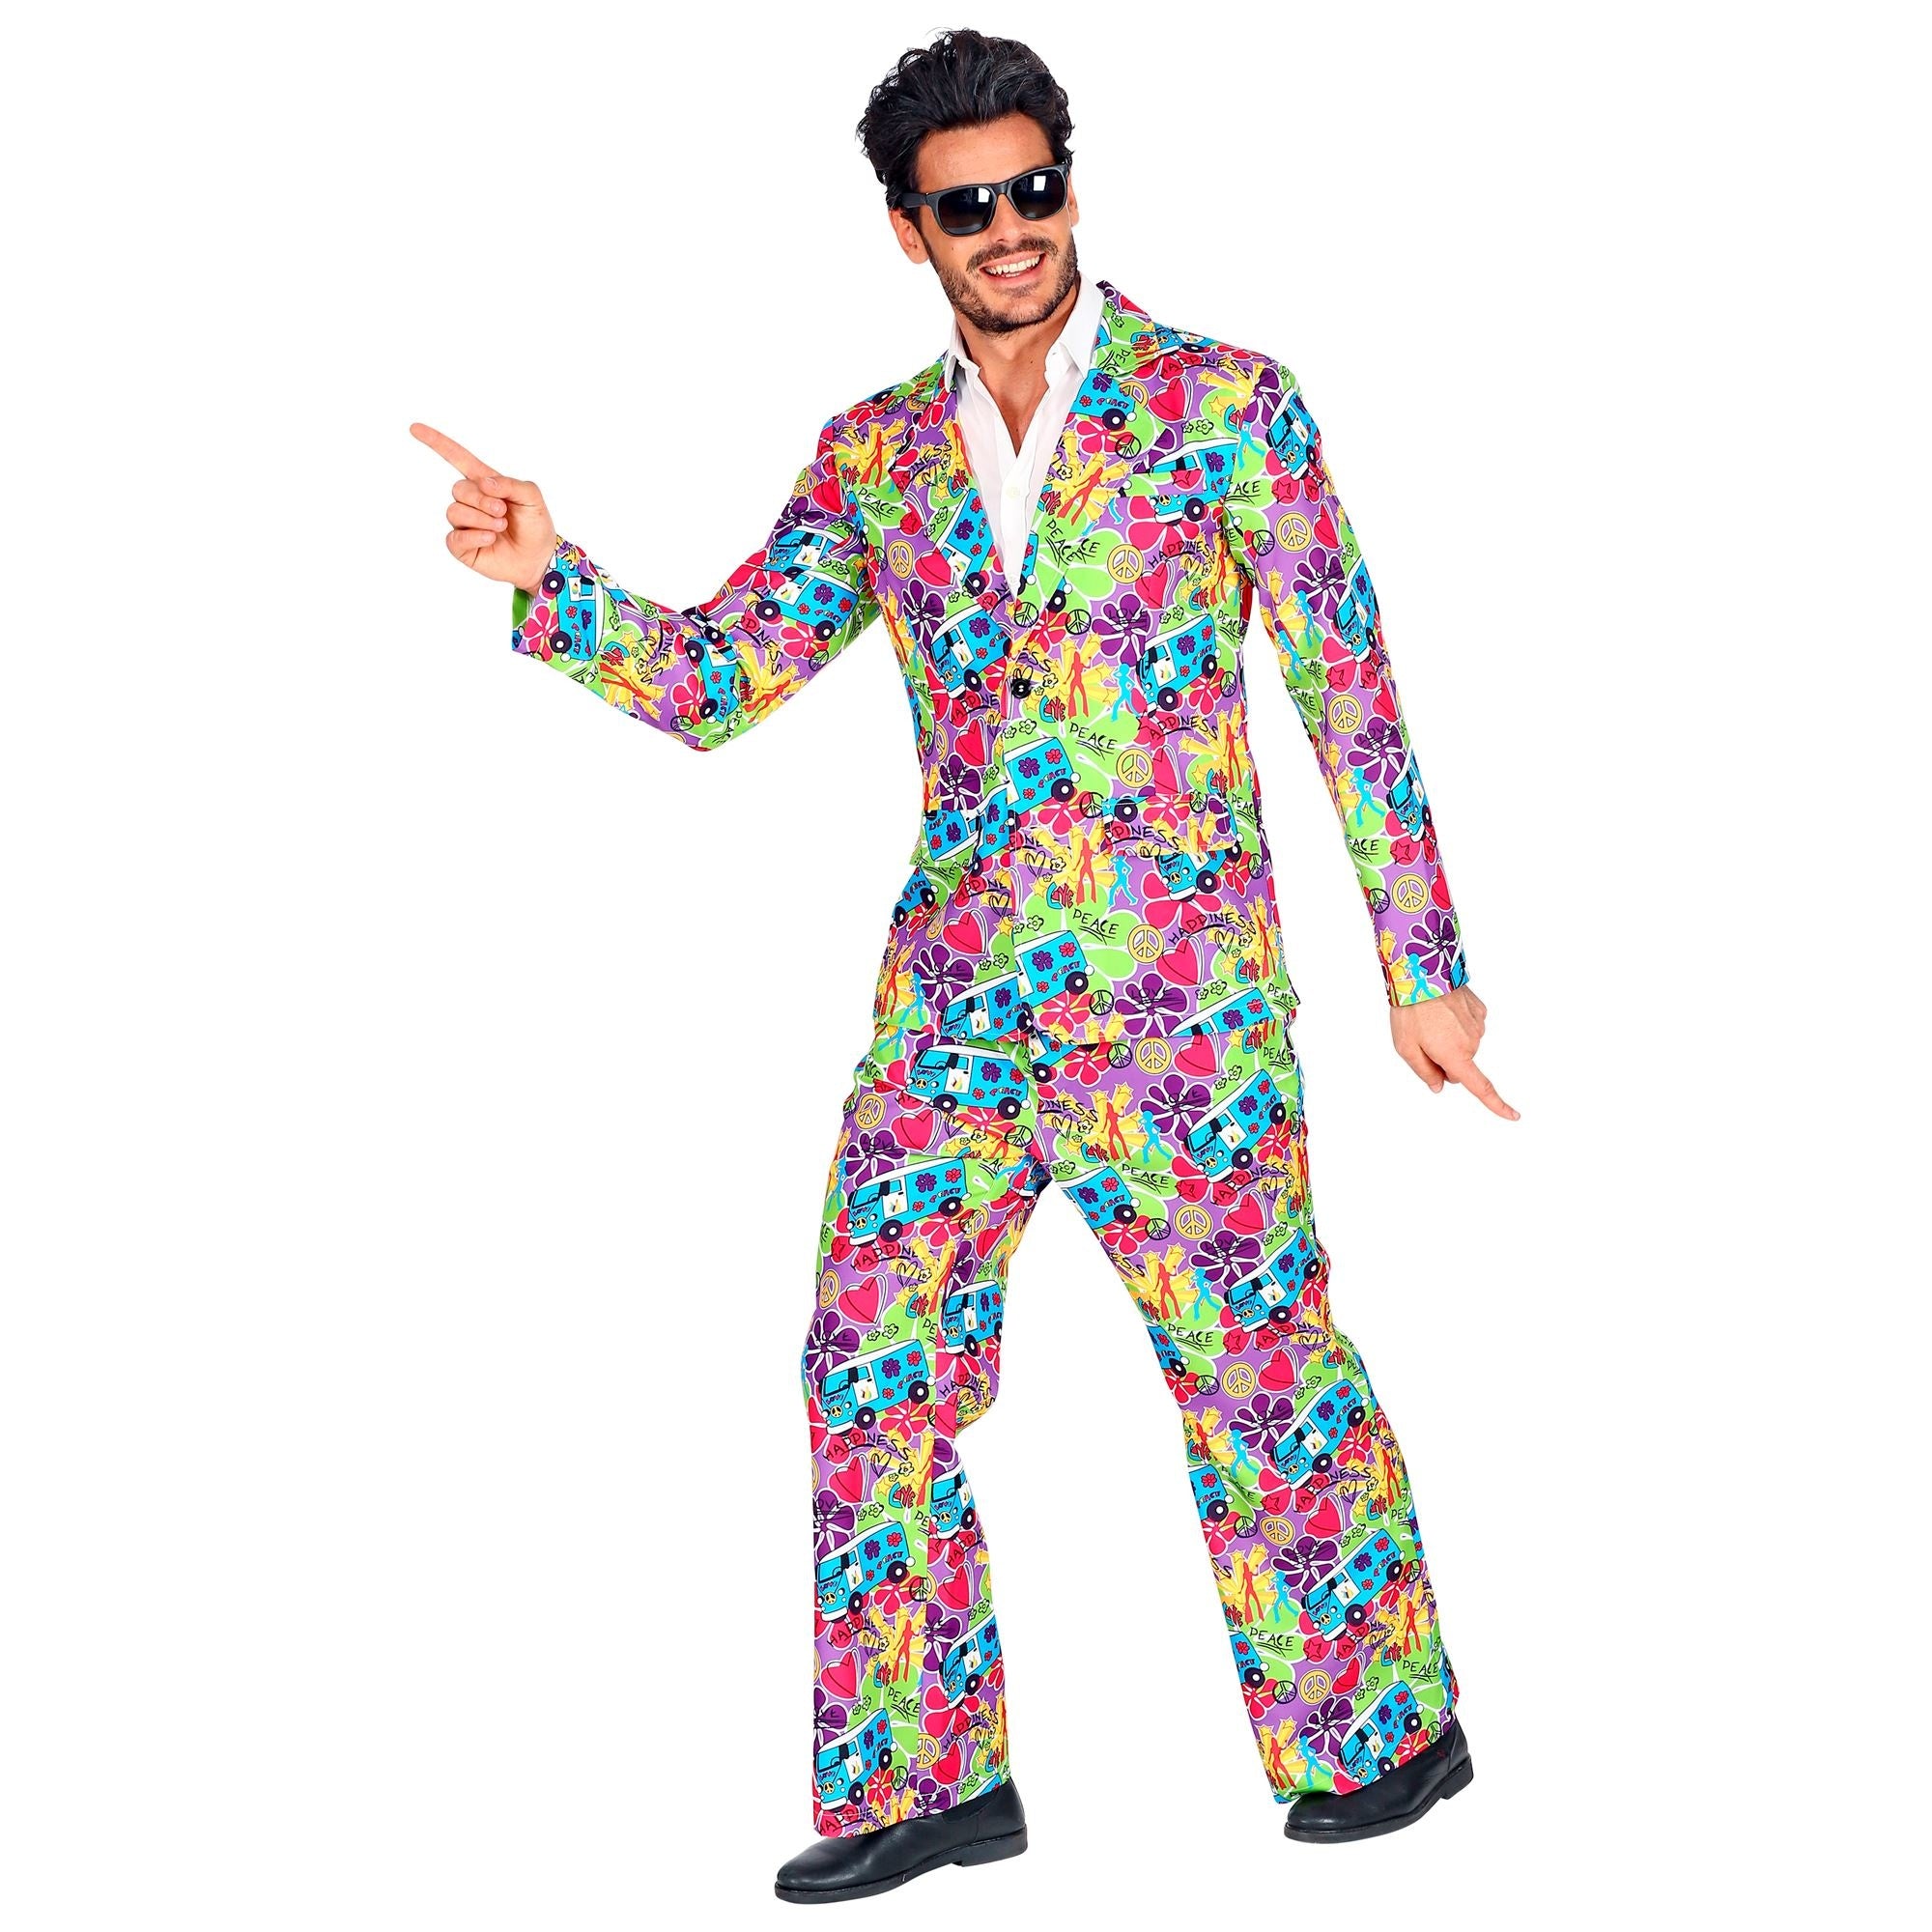 Widmann - Hippie Kostuum - Vrolijke Kleurige Hippie Symbolen - Man - multicolor - Large - Carnavalskleding - Verkleedkleding